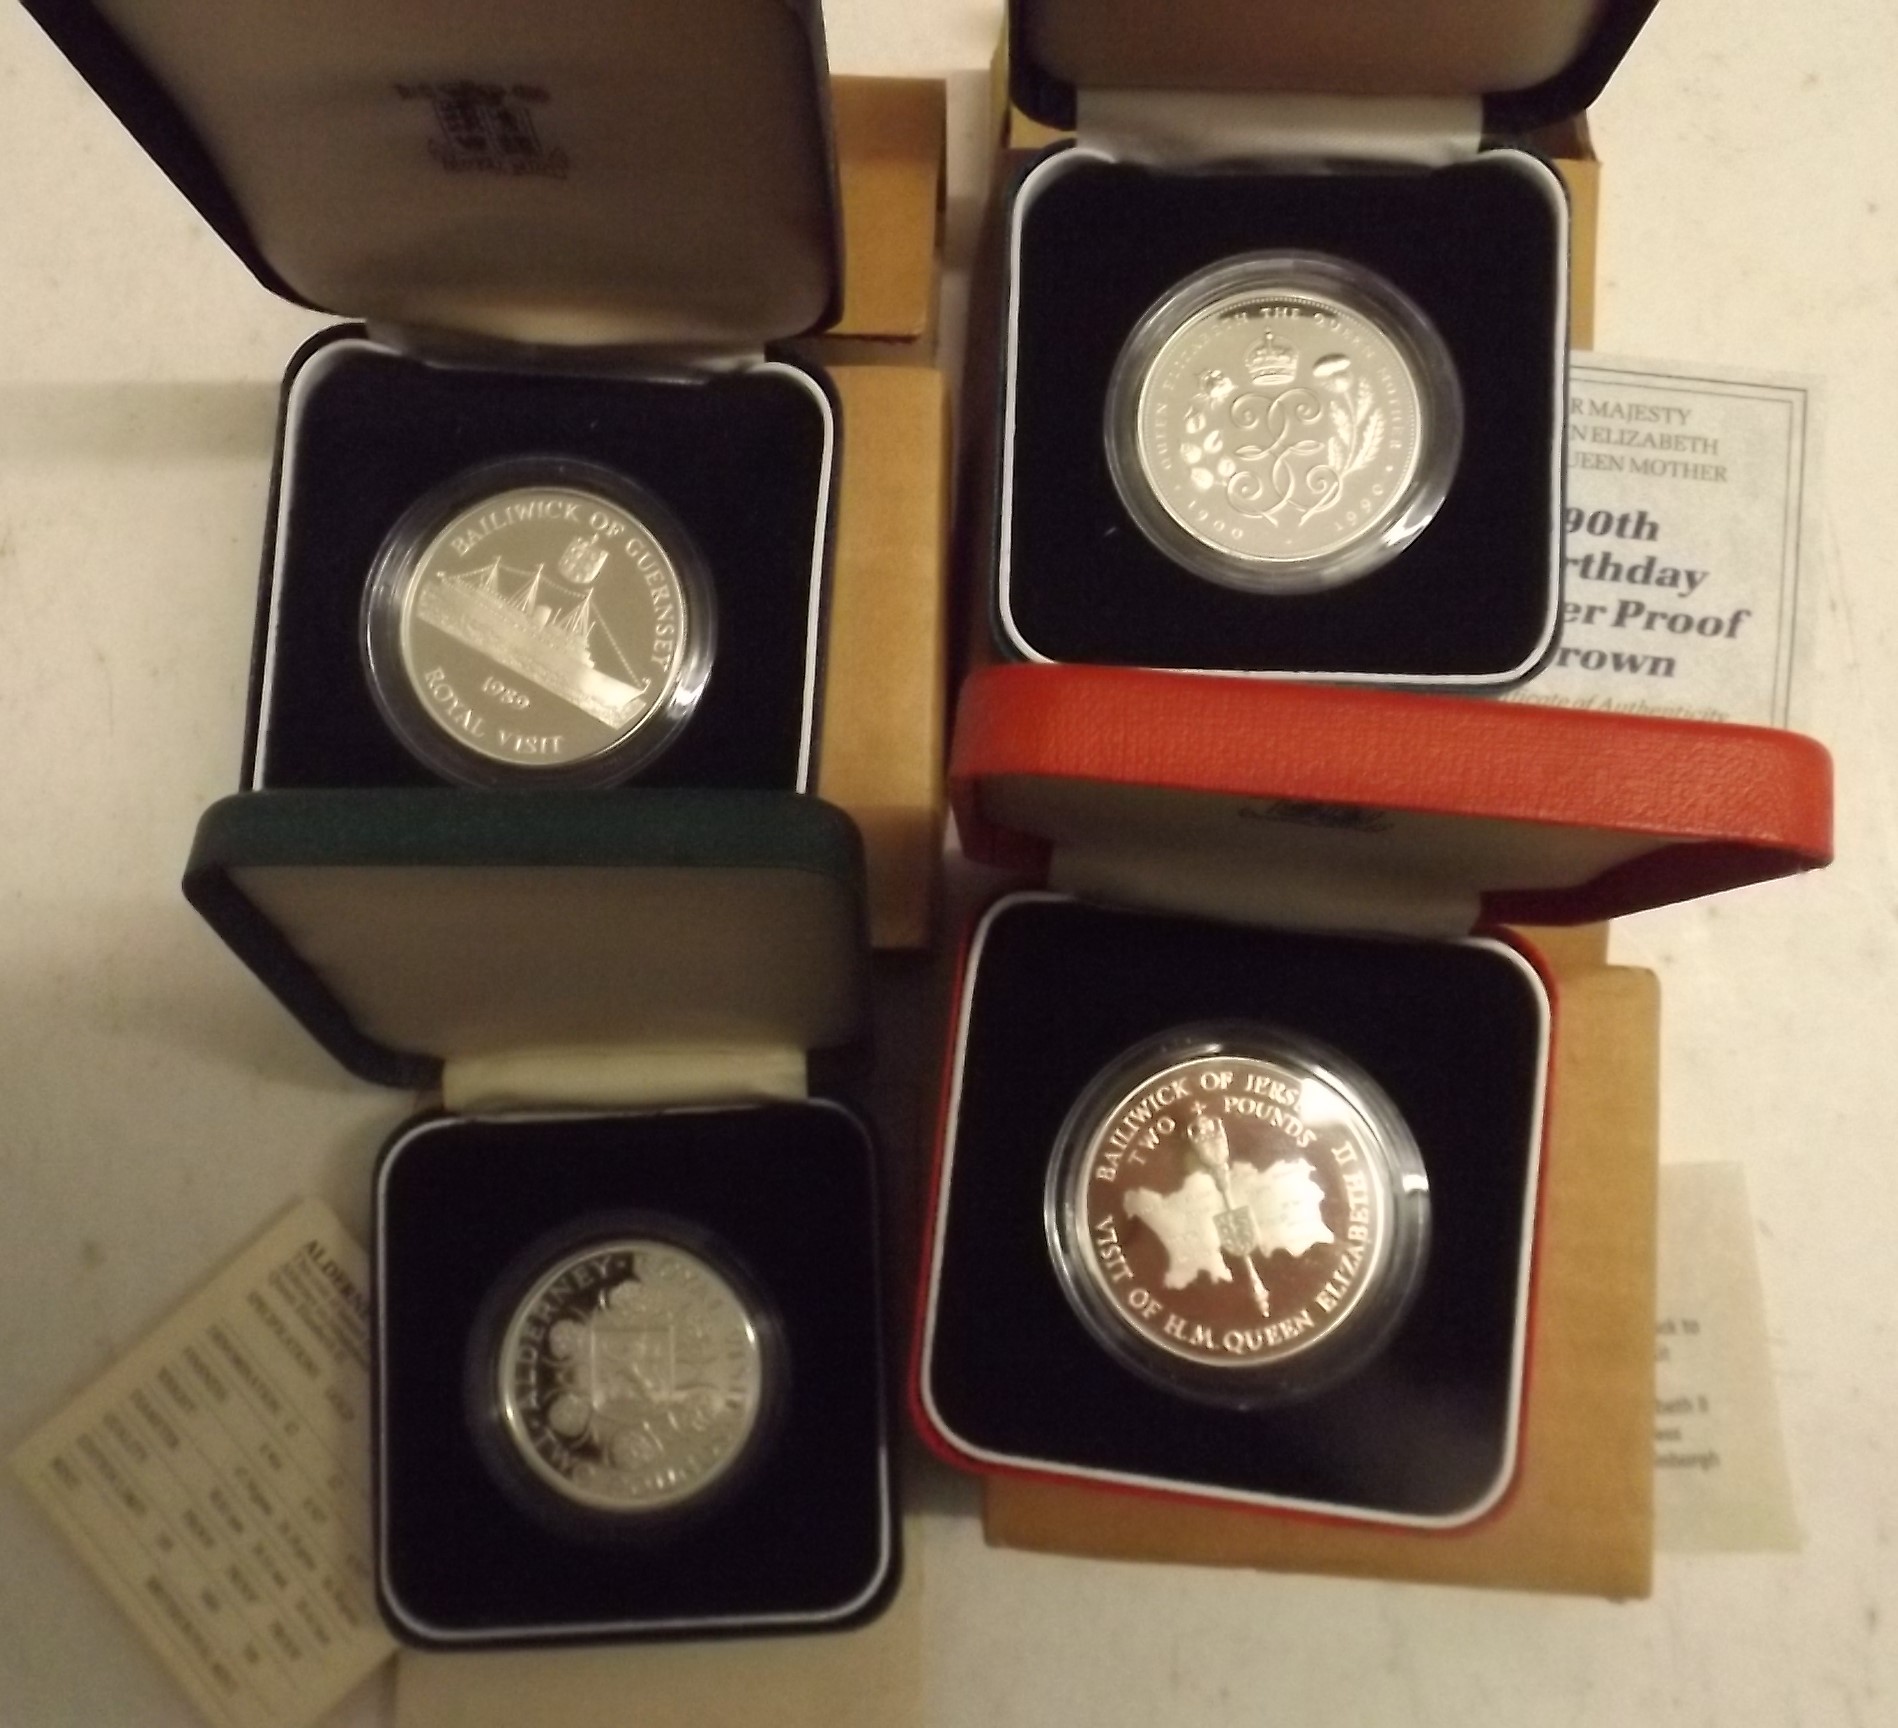 Four crown size silver coins:- Jersey £2 1989, Alderney £2 1989,